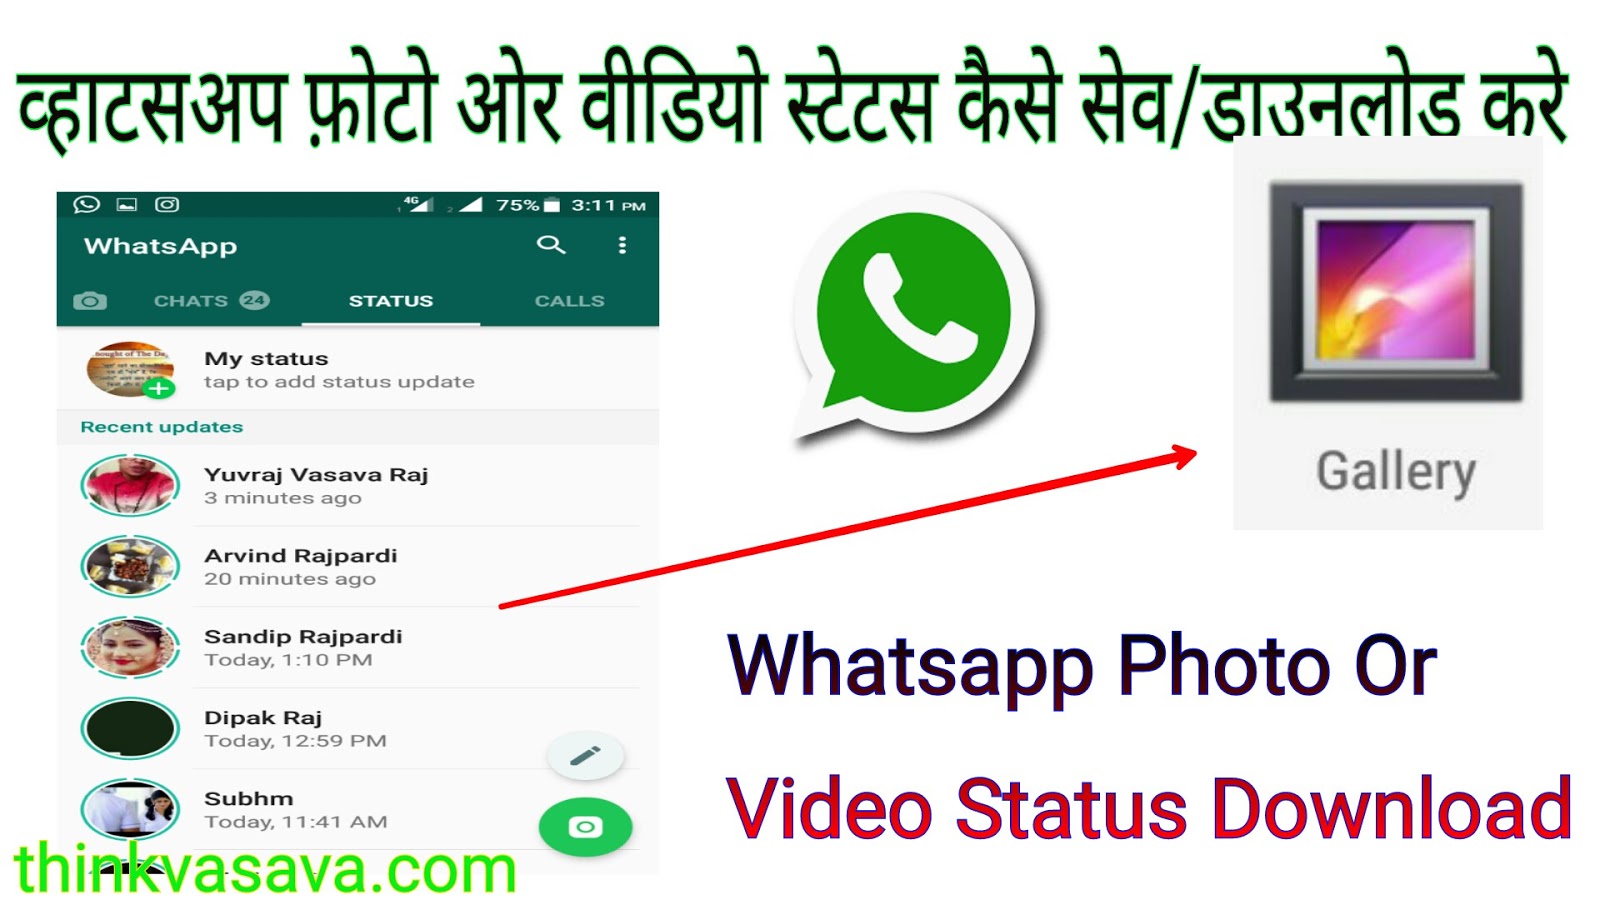 Whatsapp Photo/Image Or Video Status Download/Save Kaise Kare